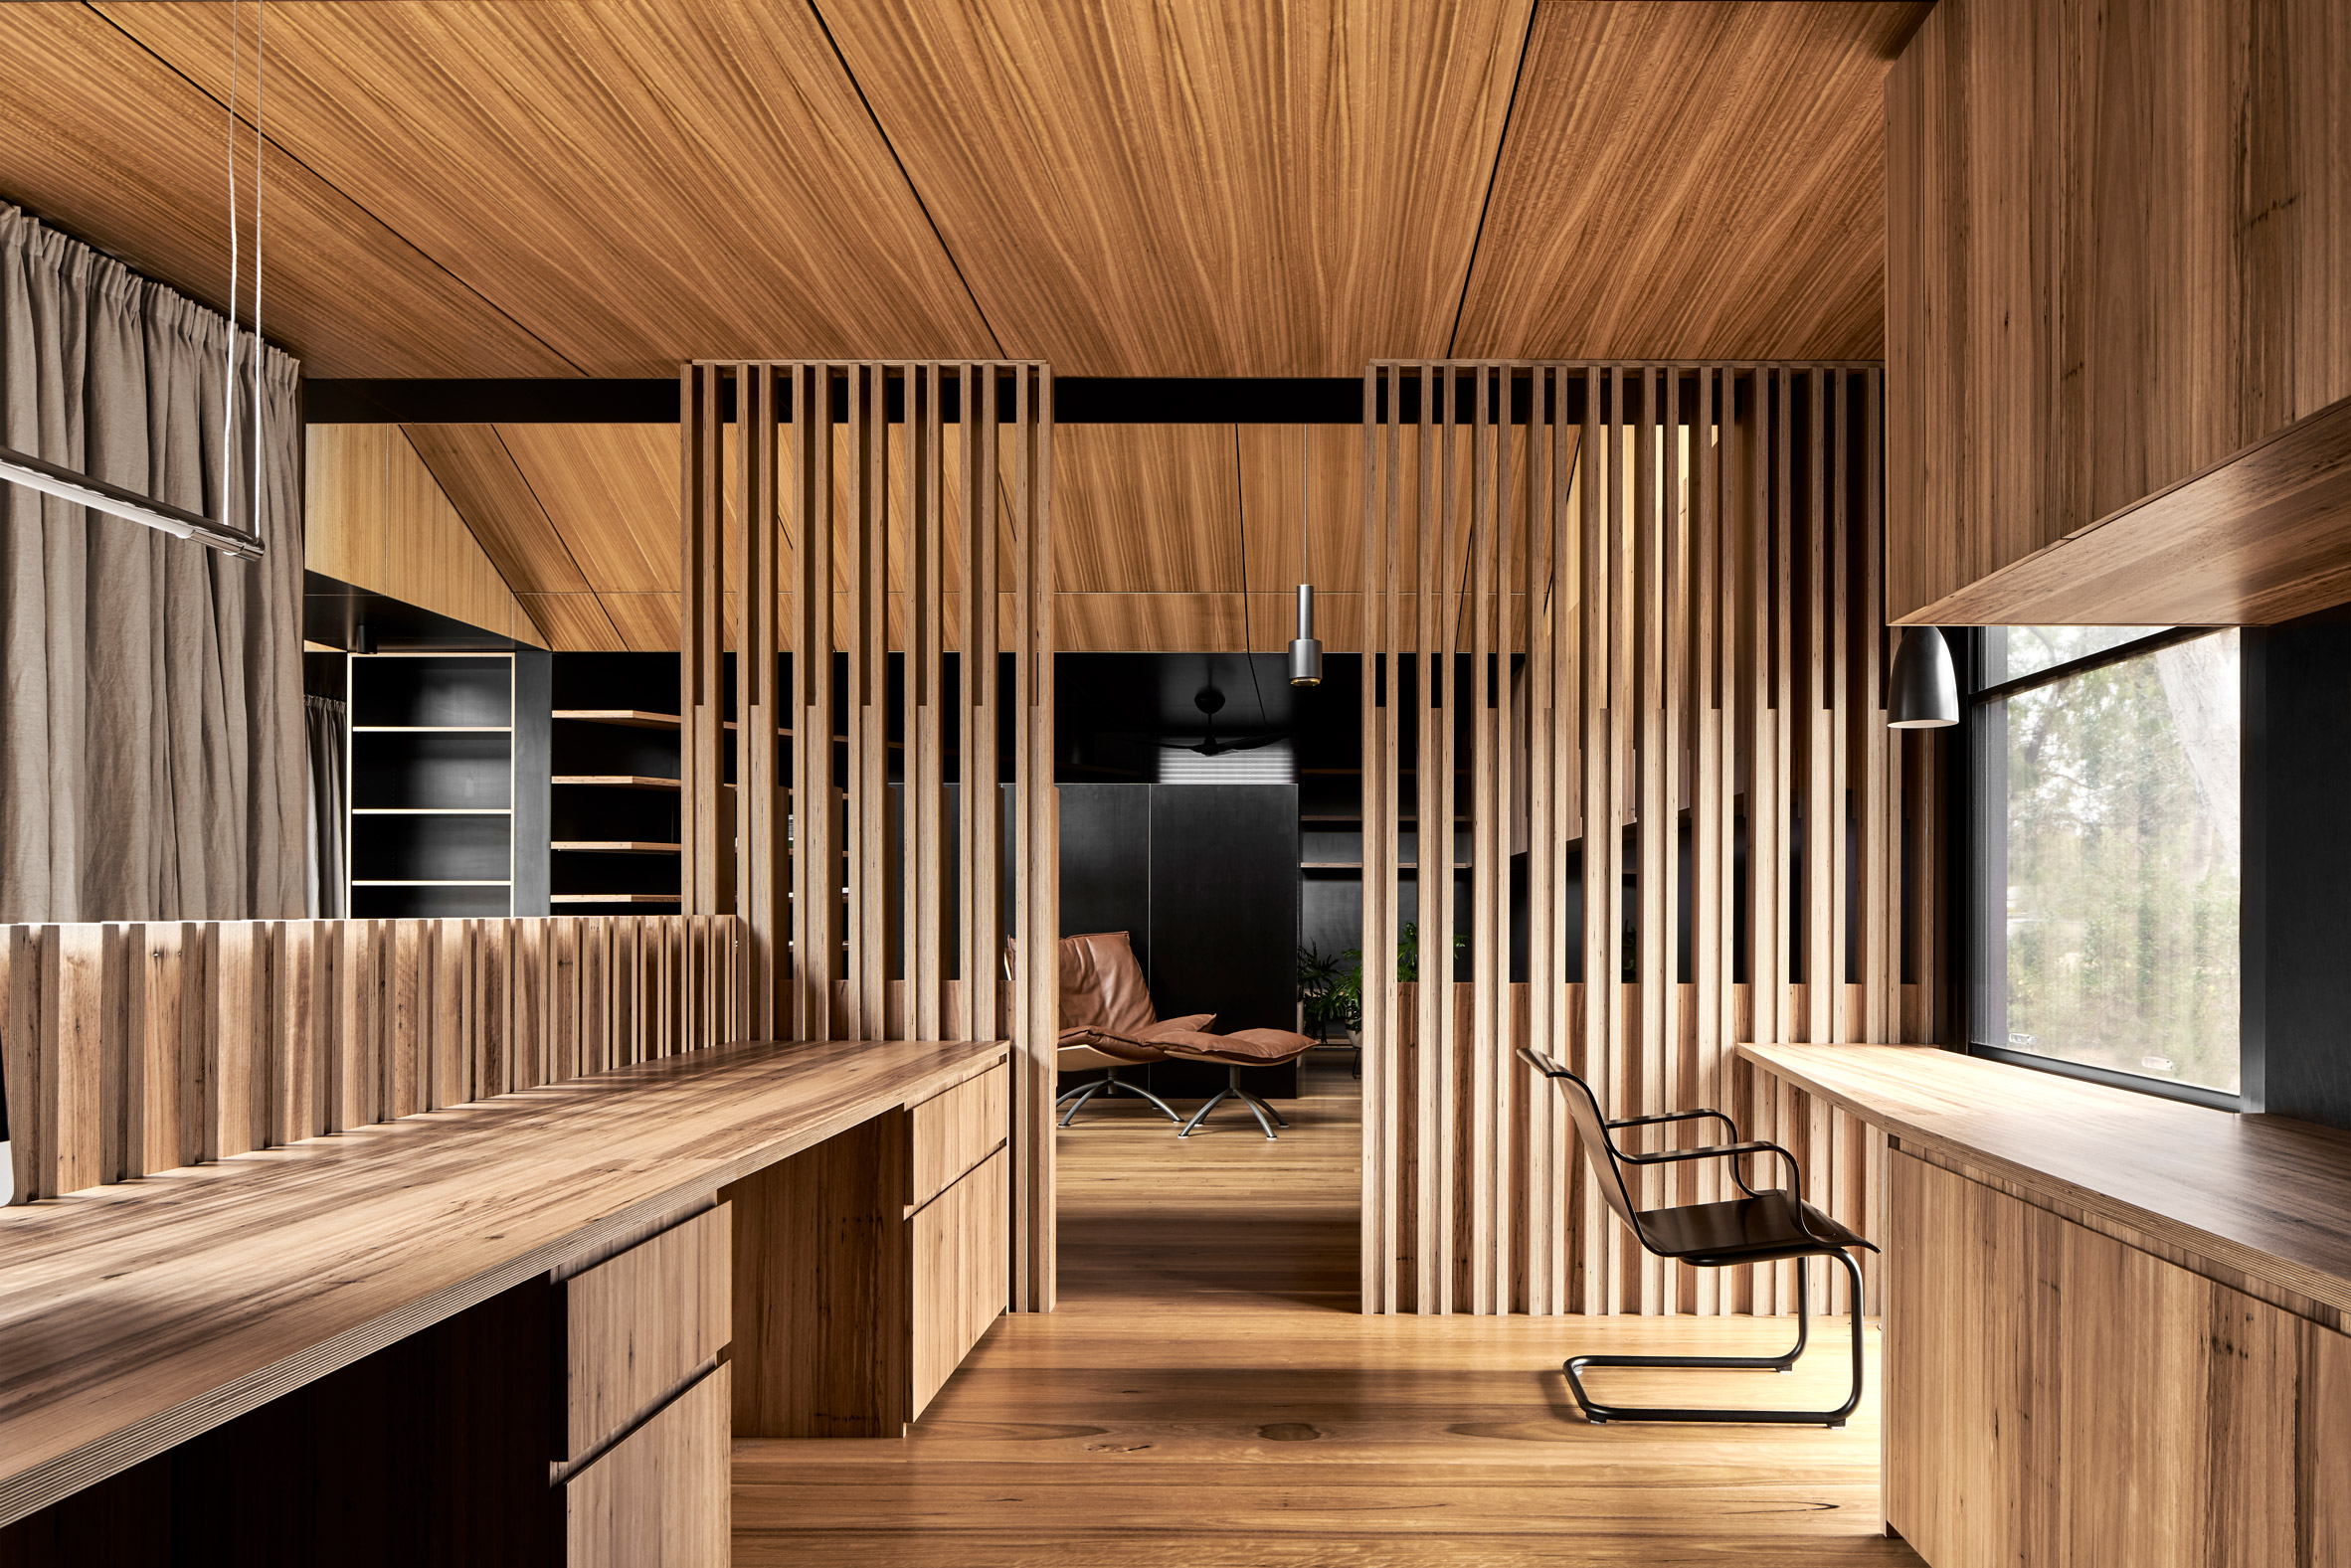 Casa X by Branch Studio Architects